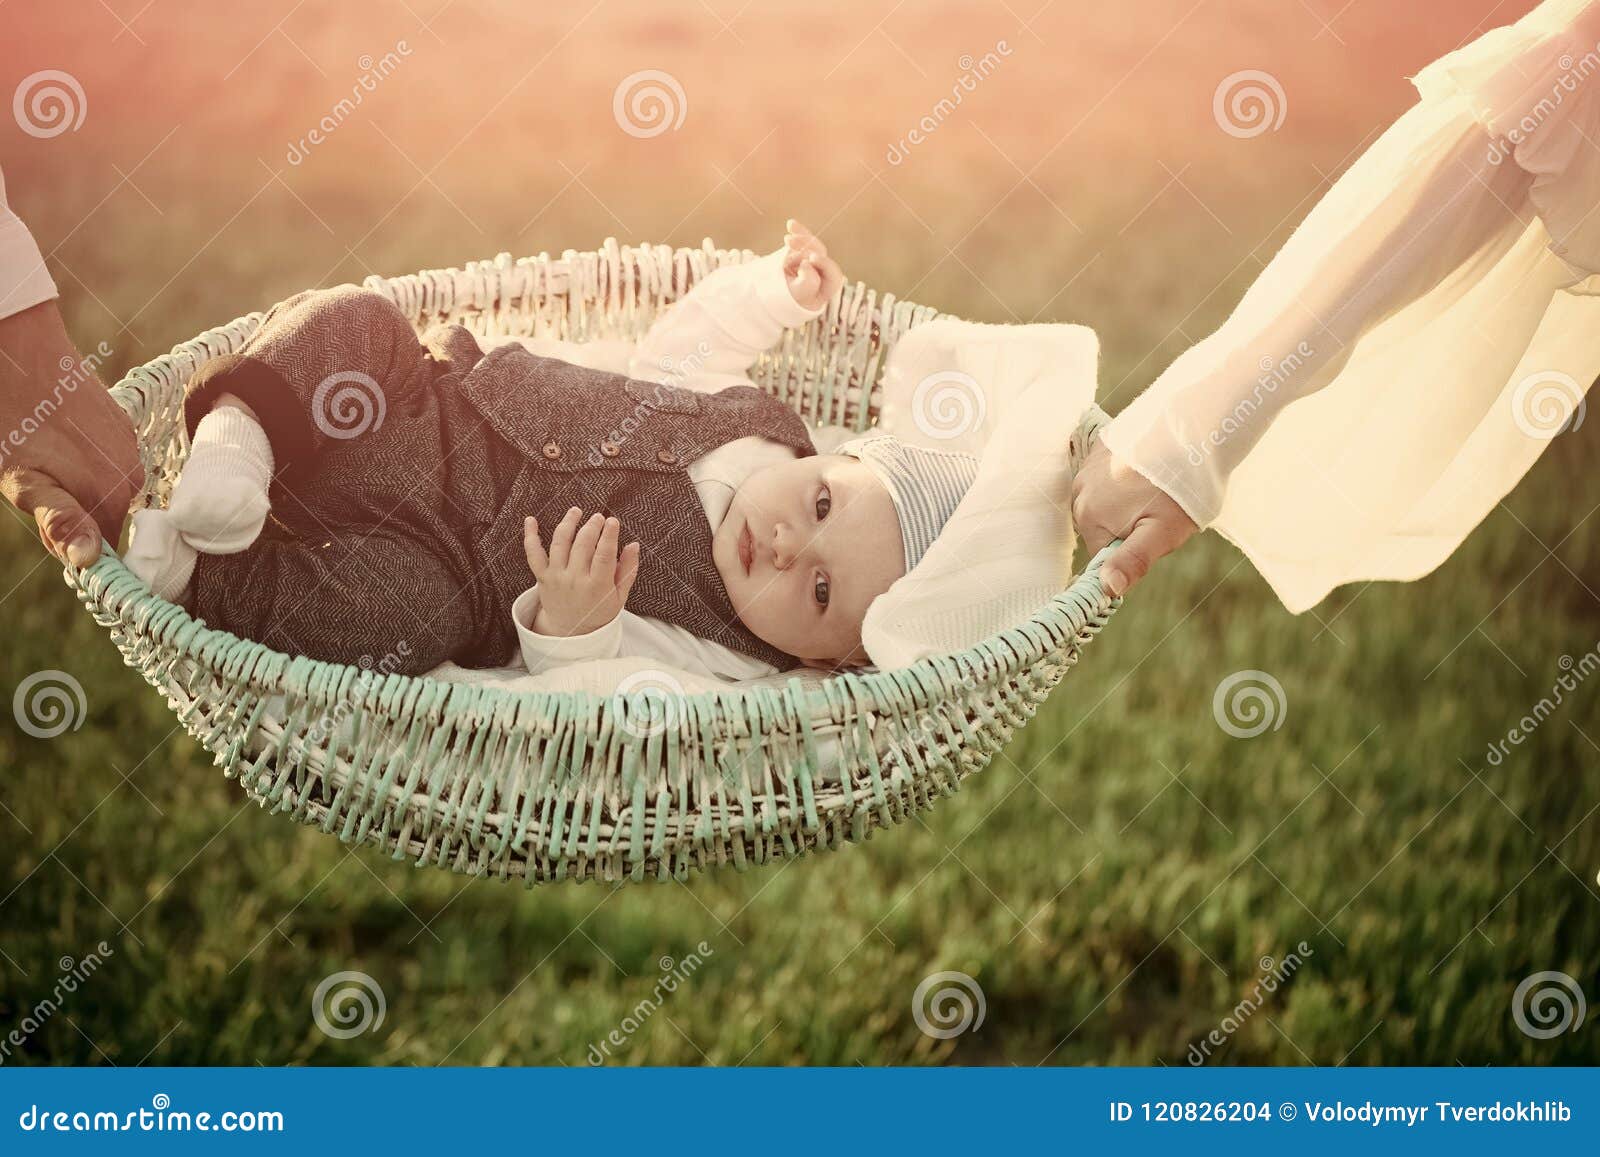 child custody. infant lie in basket held in hands on green grass